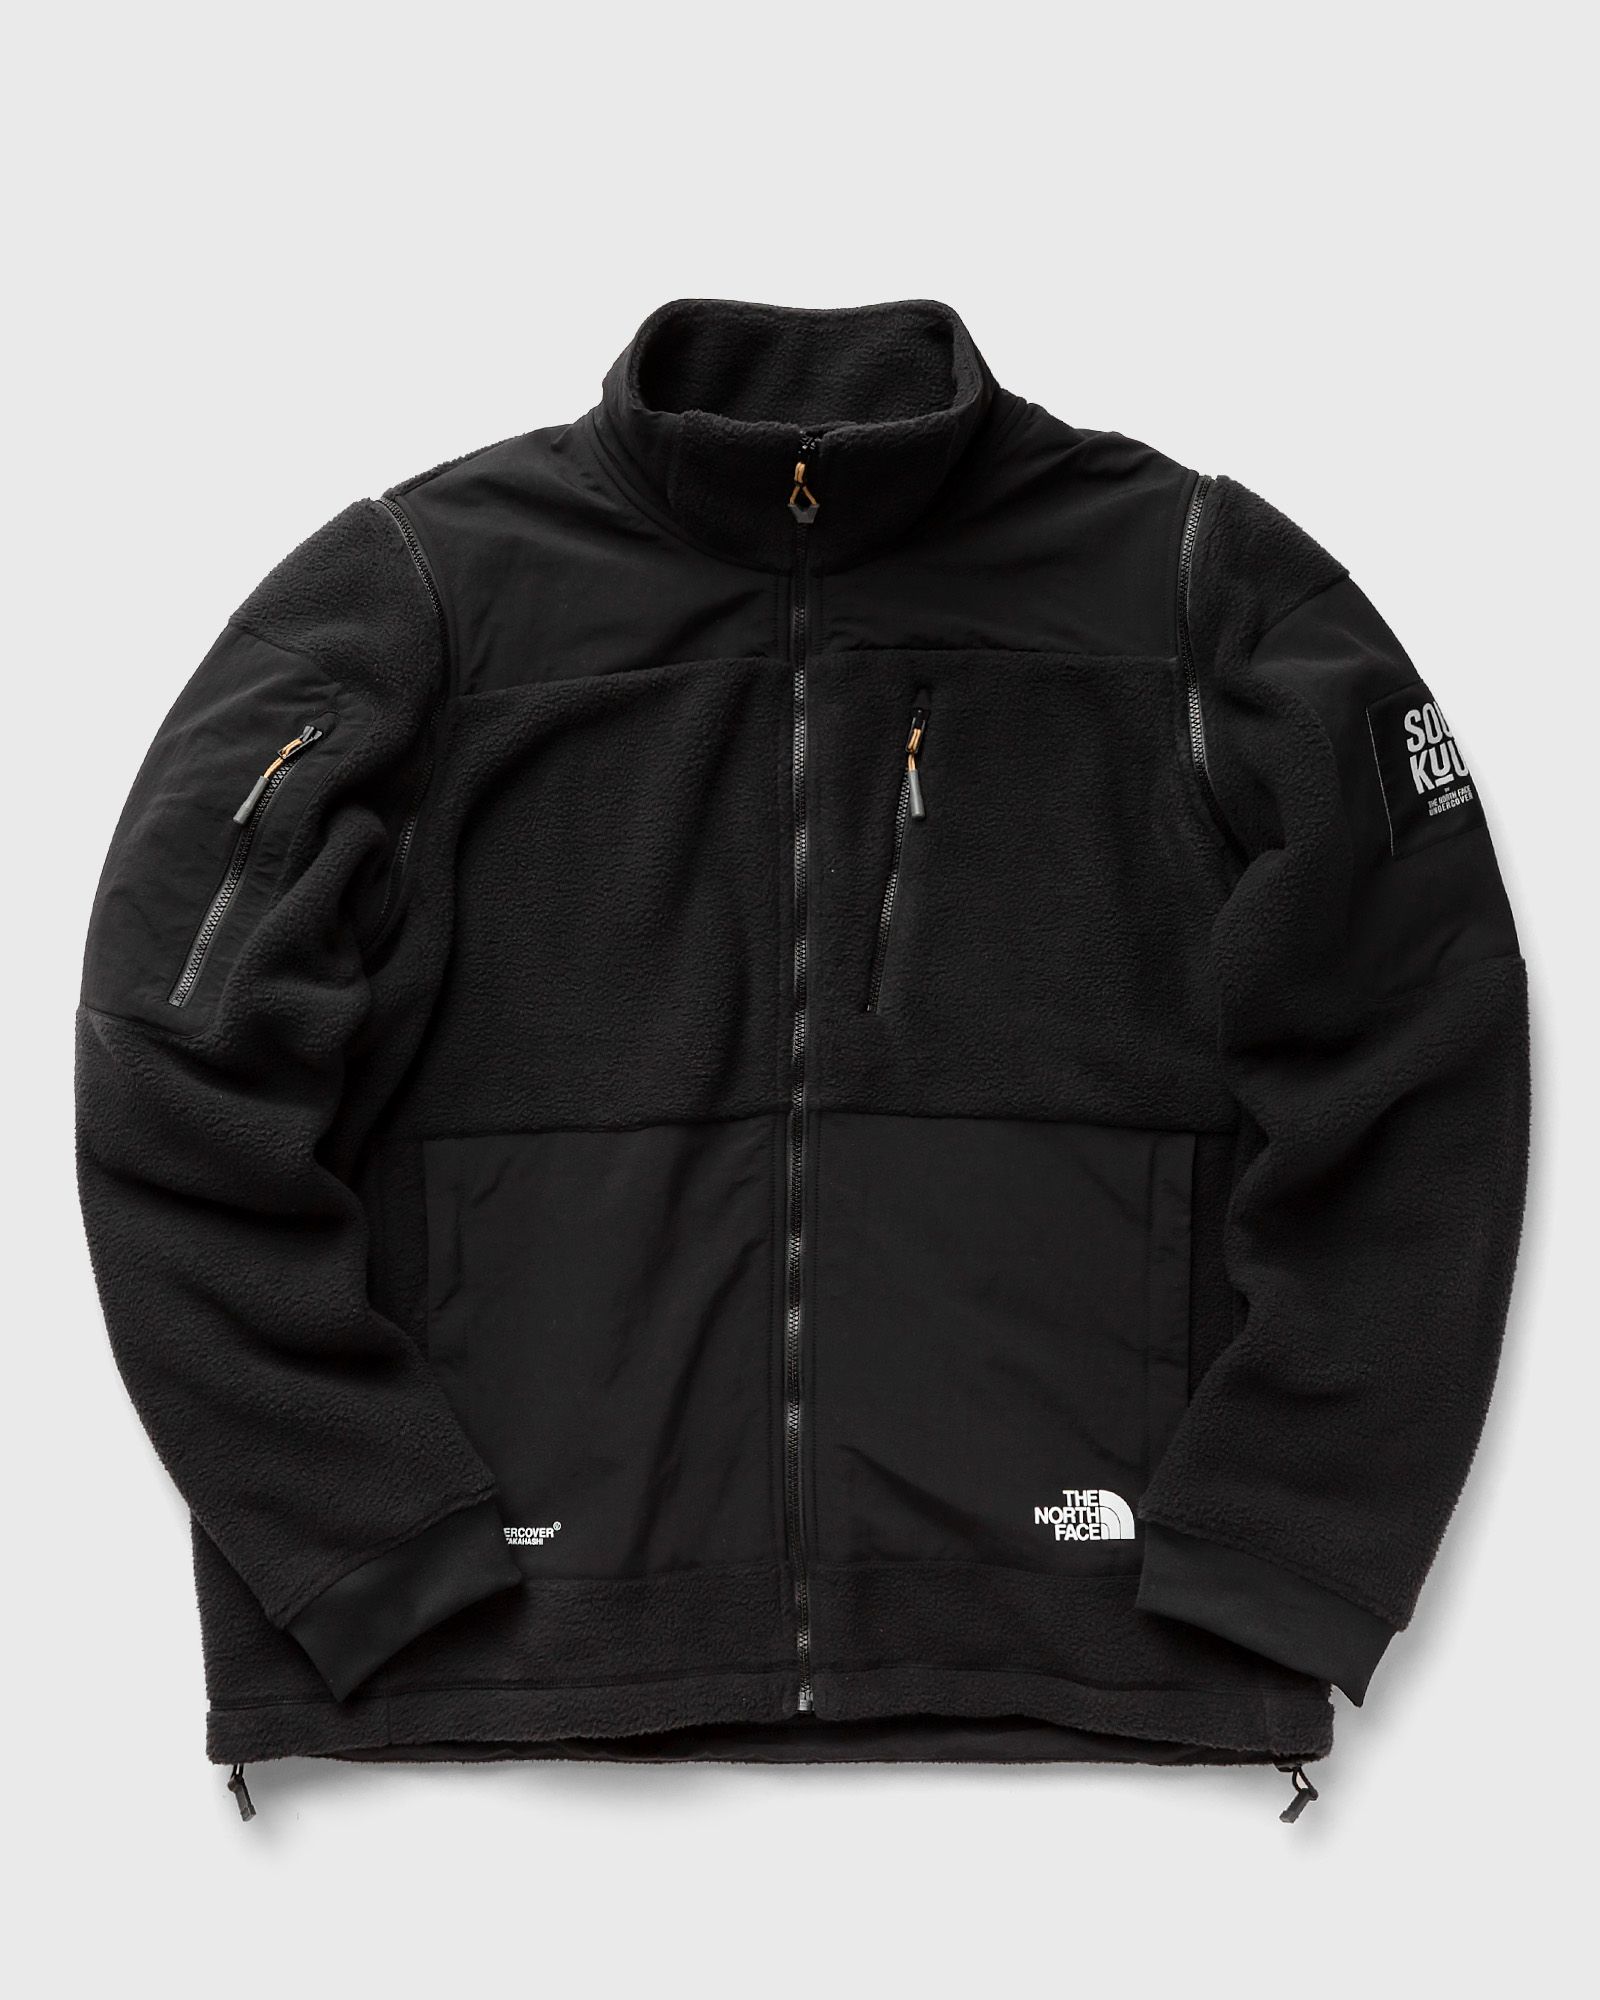 The North Face - x undercover zip-off fleece jacket men fleece jackets black in größe:m